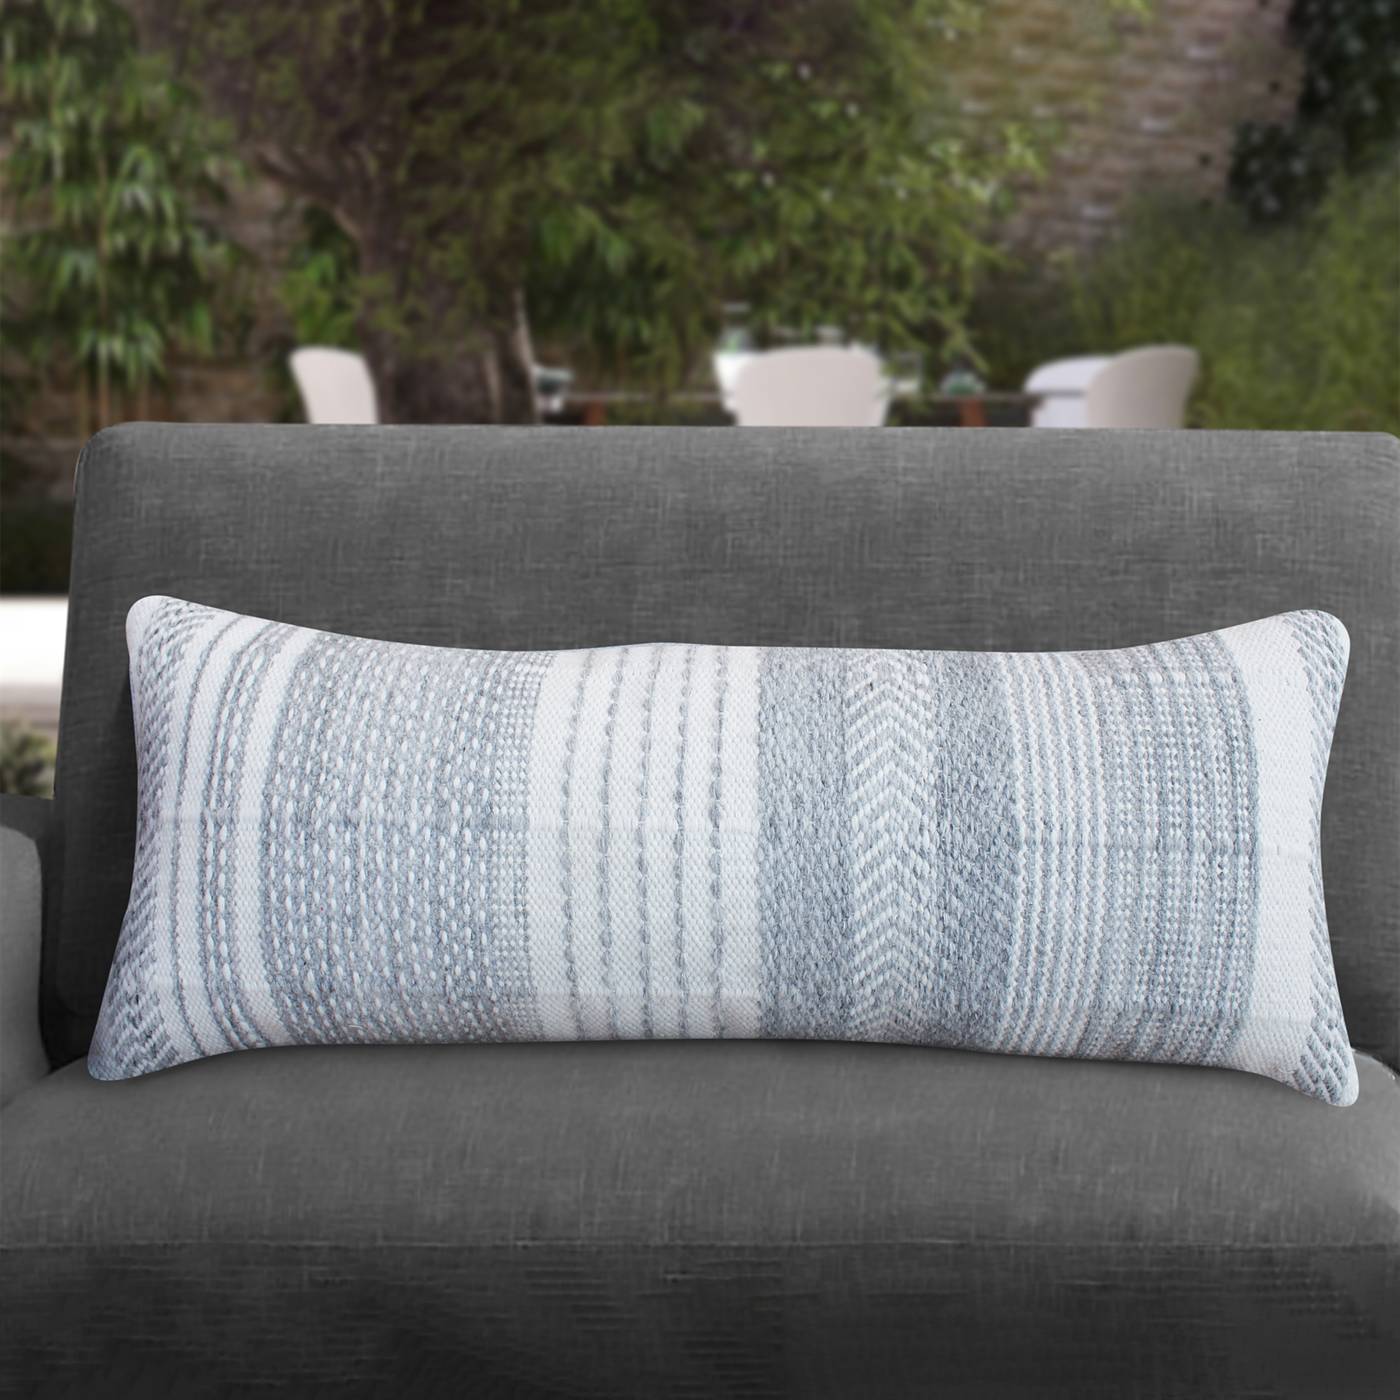 Milner Lumber Cushion, 36x91 cm, Grey, Natural White, PET, Hand Woven, Pitloom, Flat Weave